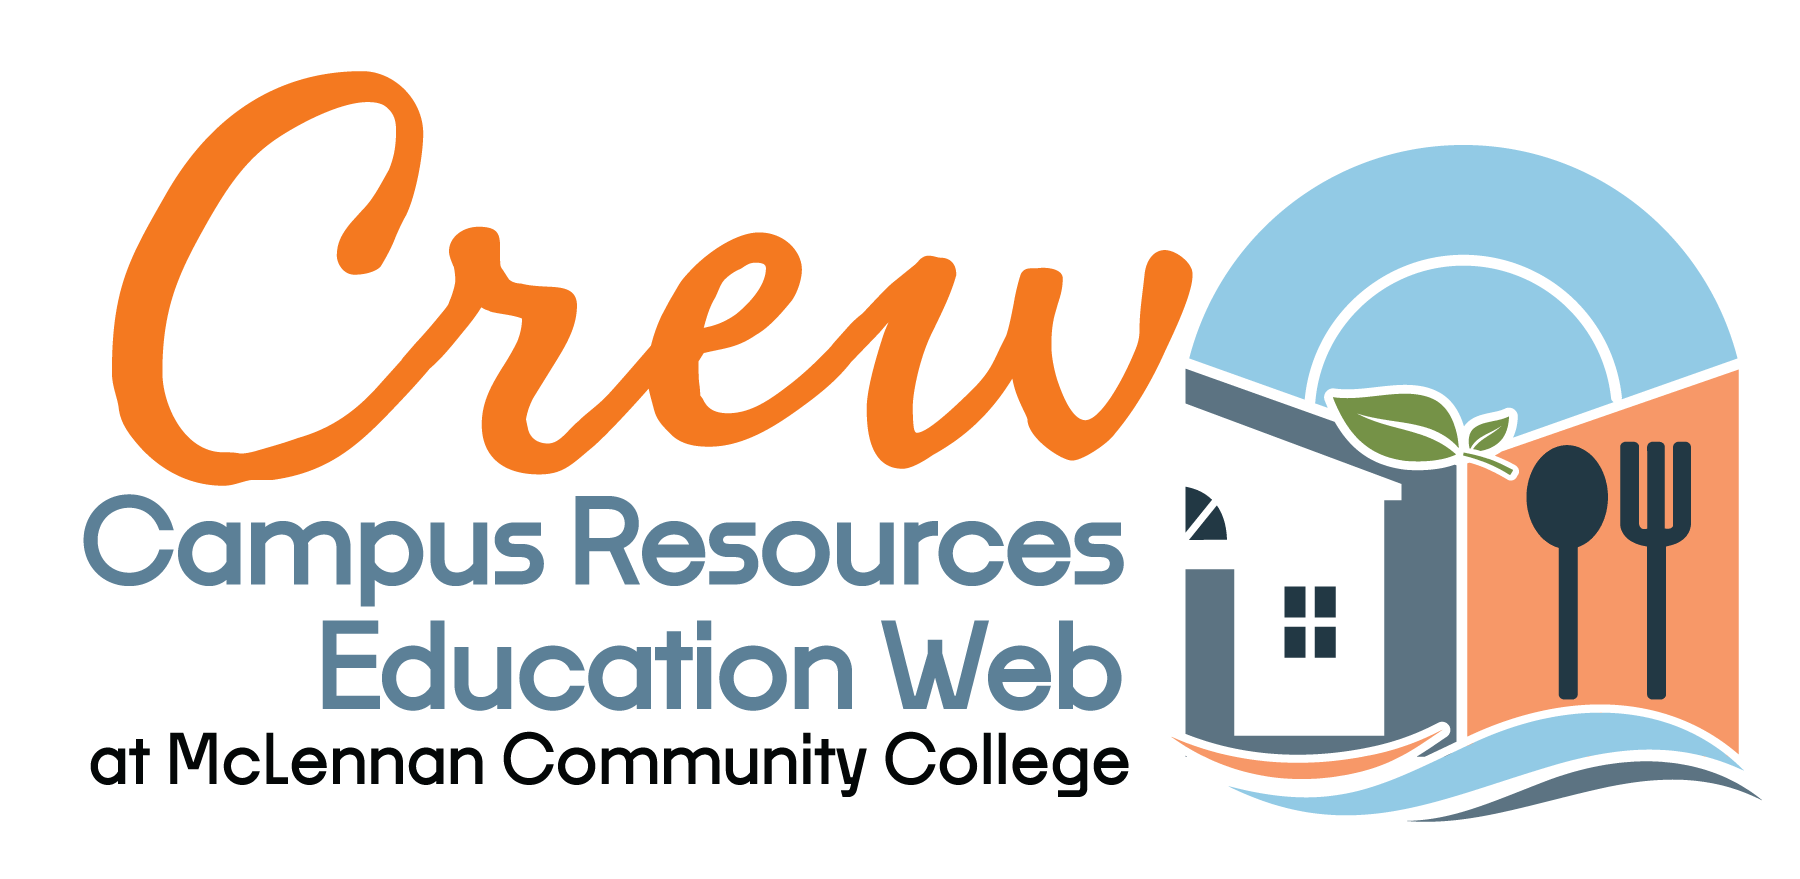 CREW-Campus-Resources-Education-Web_FINAL-Horiz.png